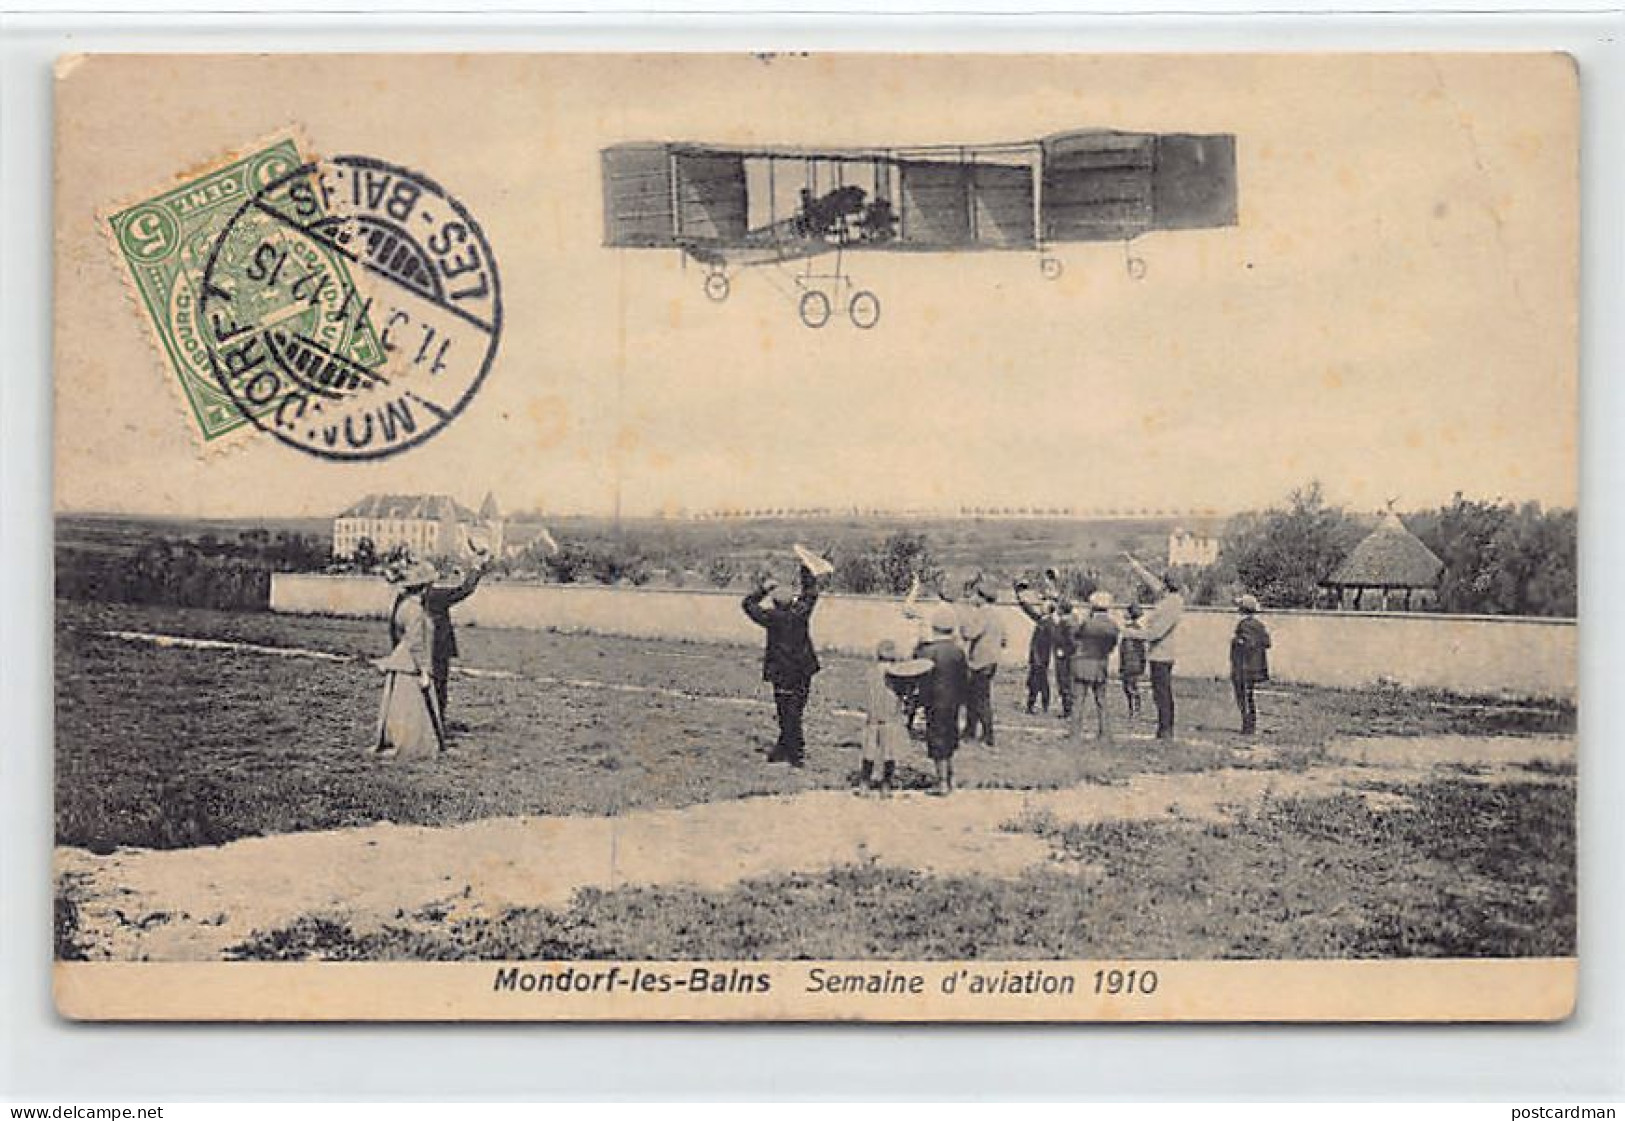 Luxembourg - MONDORF LES BAINS - Semain D'Aviation 1910 - Ed. N. Schumacher - Bad Mondorf